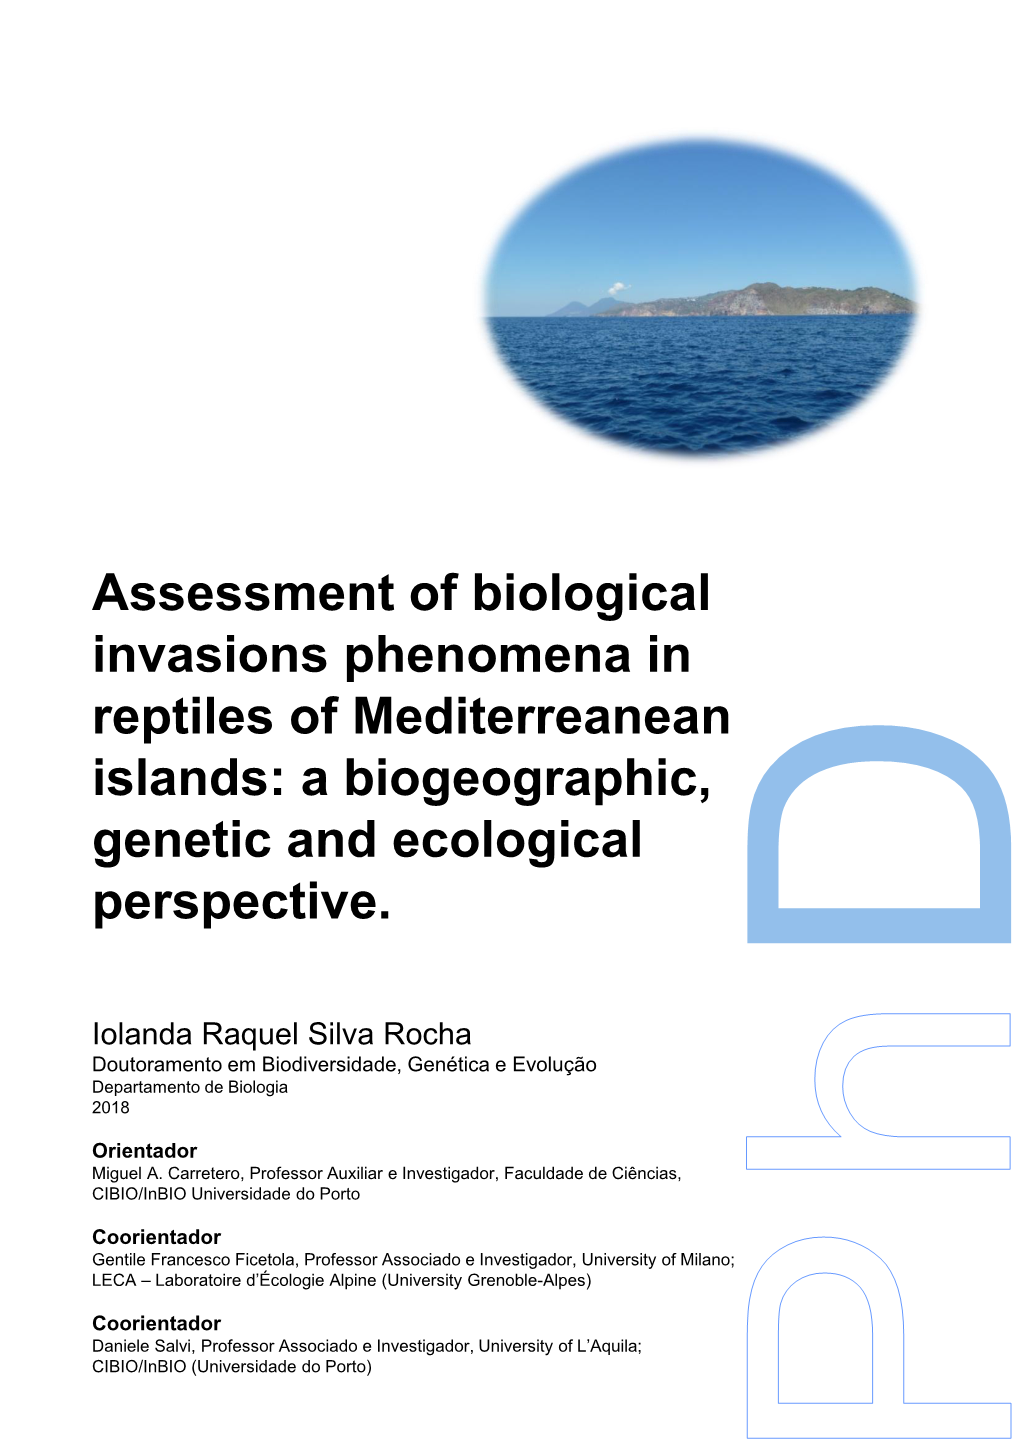 Assessment of Biological Invasions Phenomena in Reptiles of Mediterreanean Islands